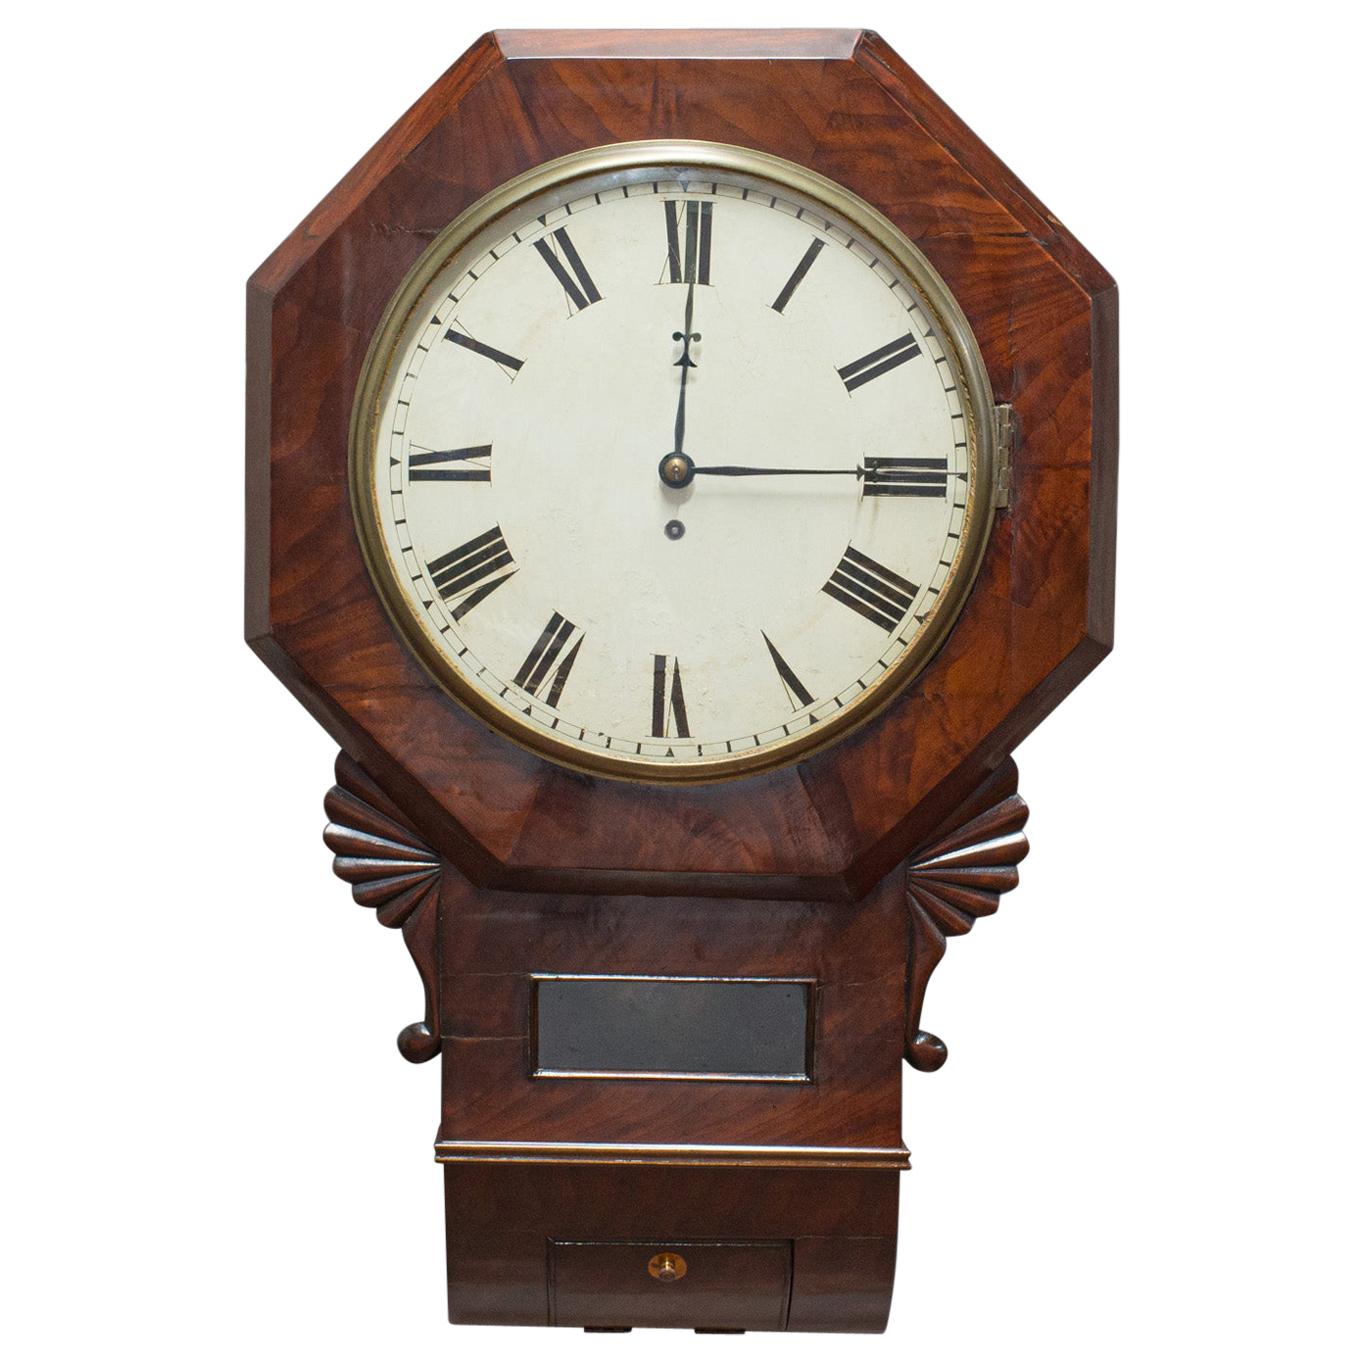 Antique Drop Dial Wall Clock, English, Timepiece, Fusee, Victorian, circa 1870